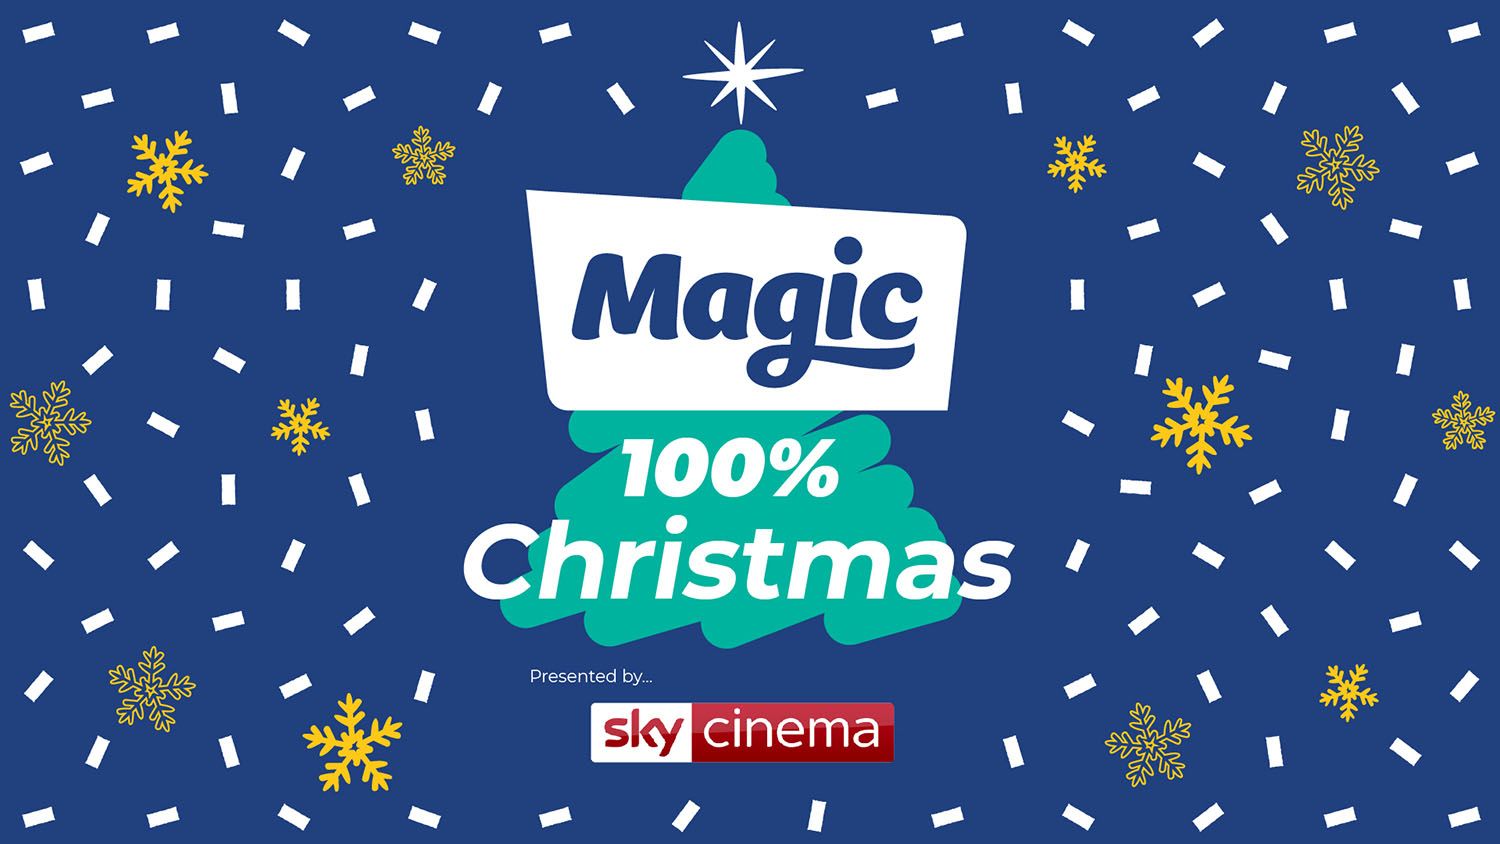 Magic Radio's gone 100% Christmas! 🎄  Music  Magic Radio